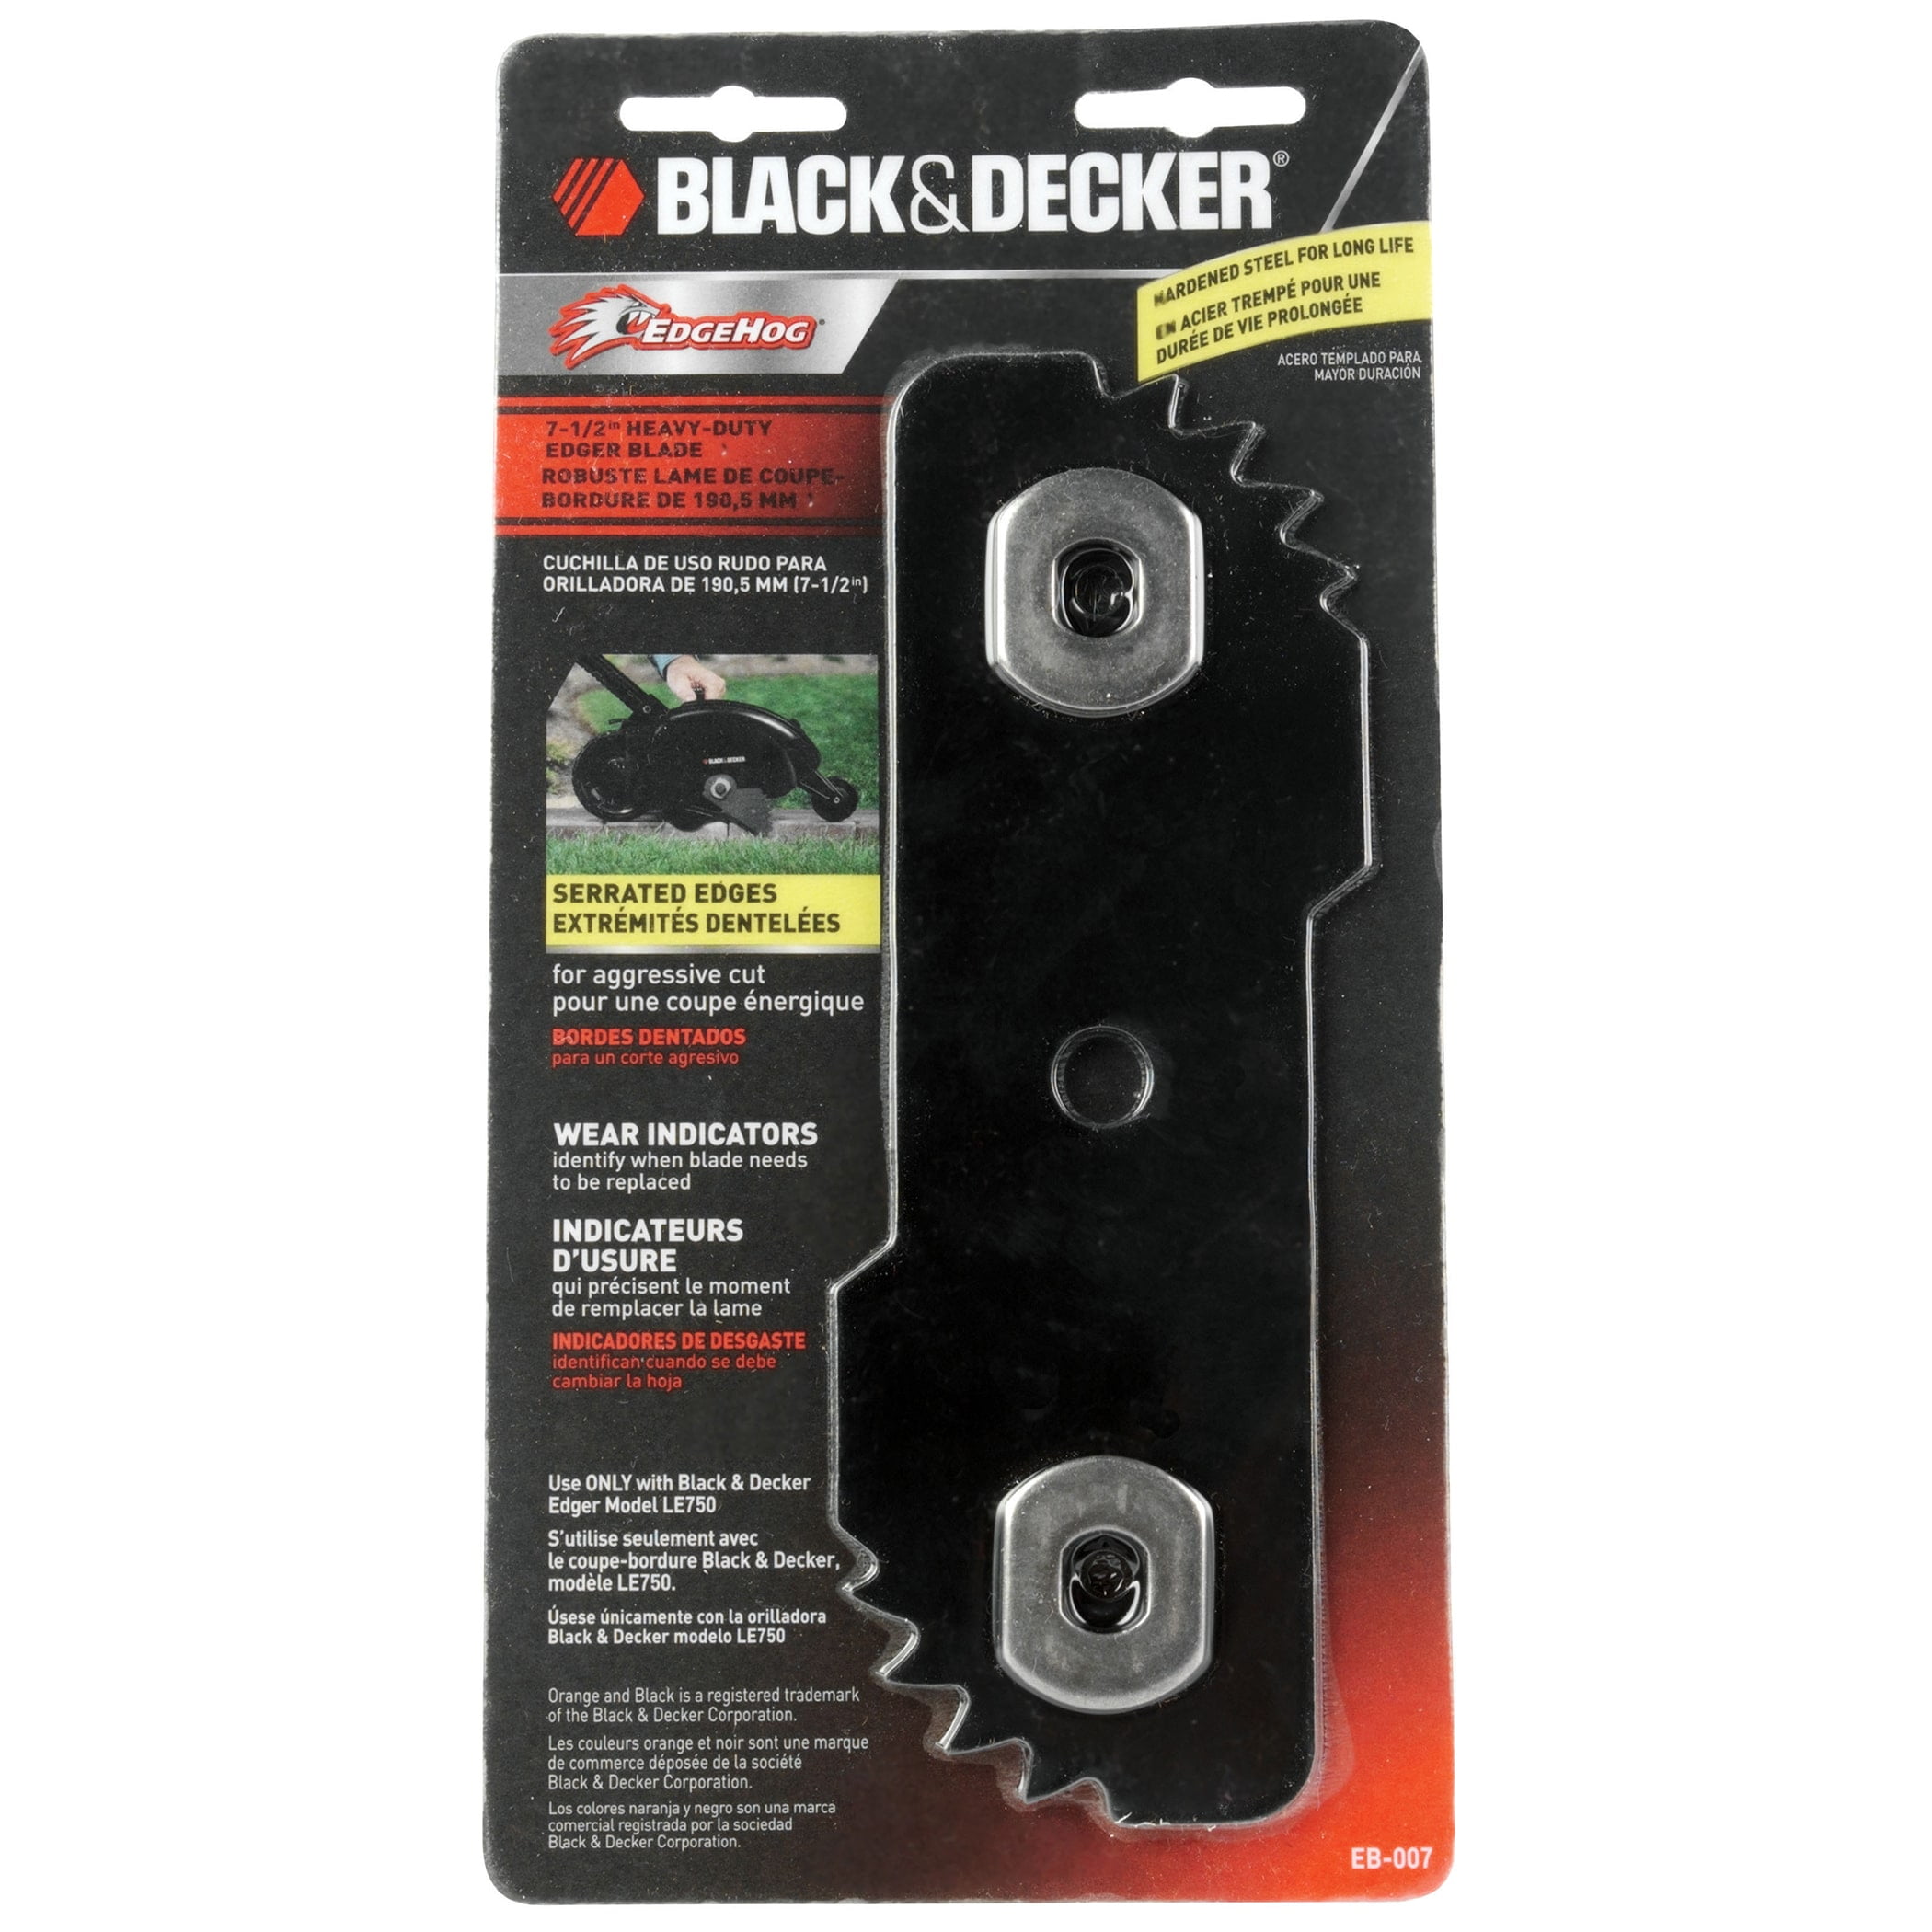 BLACK AND DECKER EDGE HOG, Black+Decker Edger Trencher Review